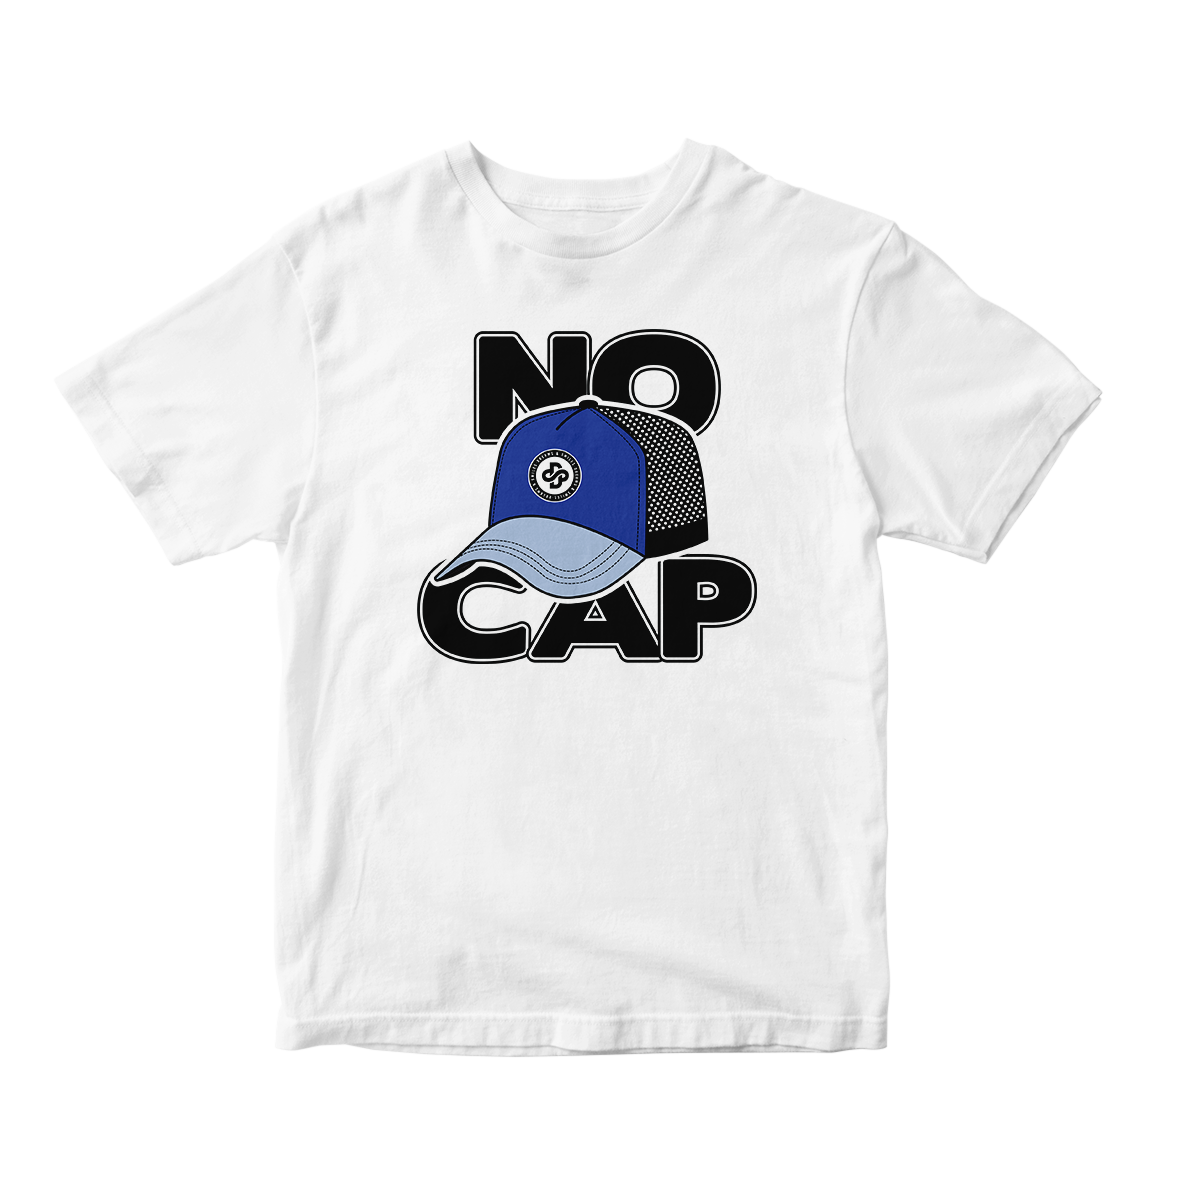 'No Cap' in Space Jam CW Short Sleeve Tee